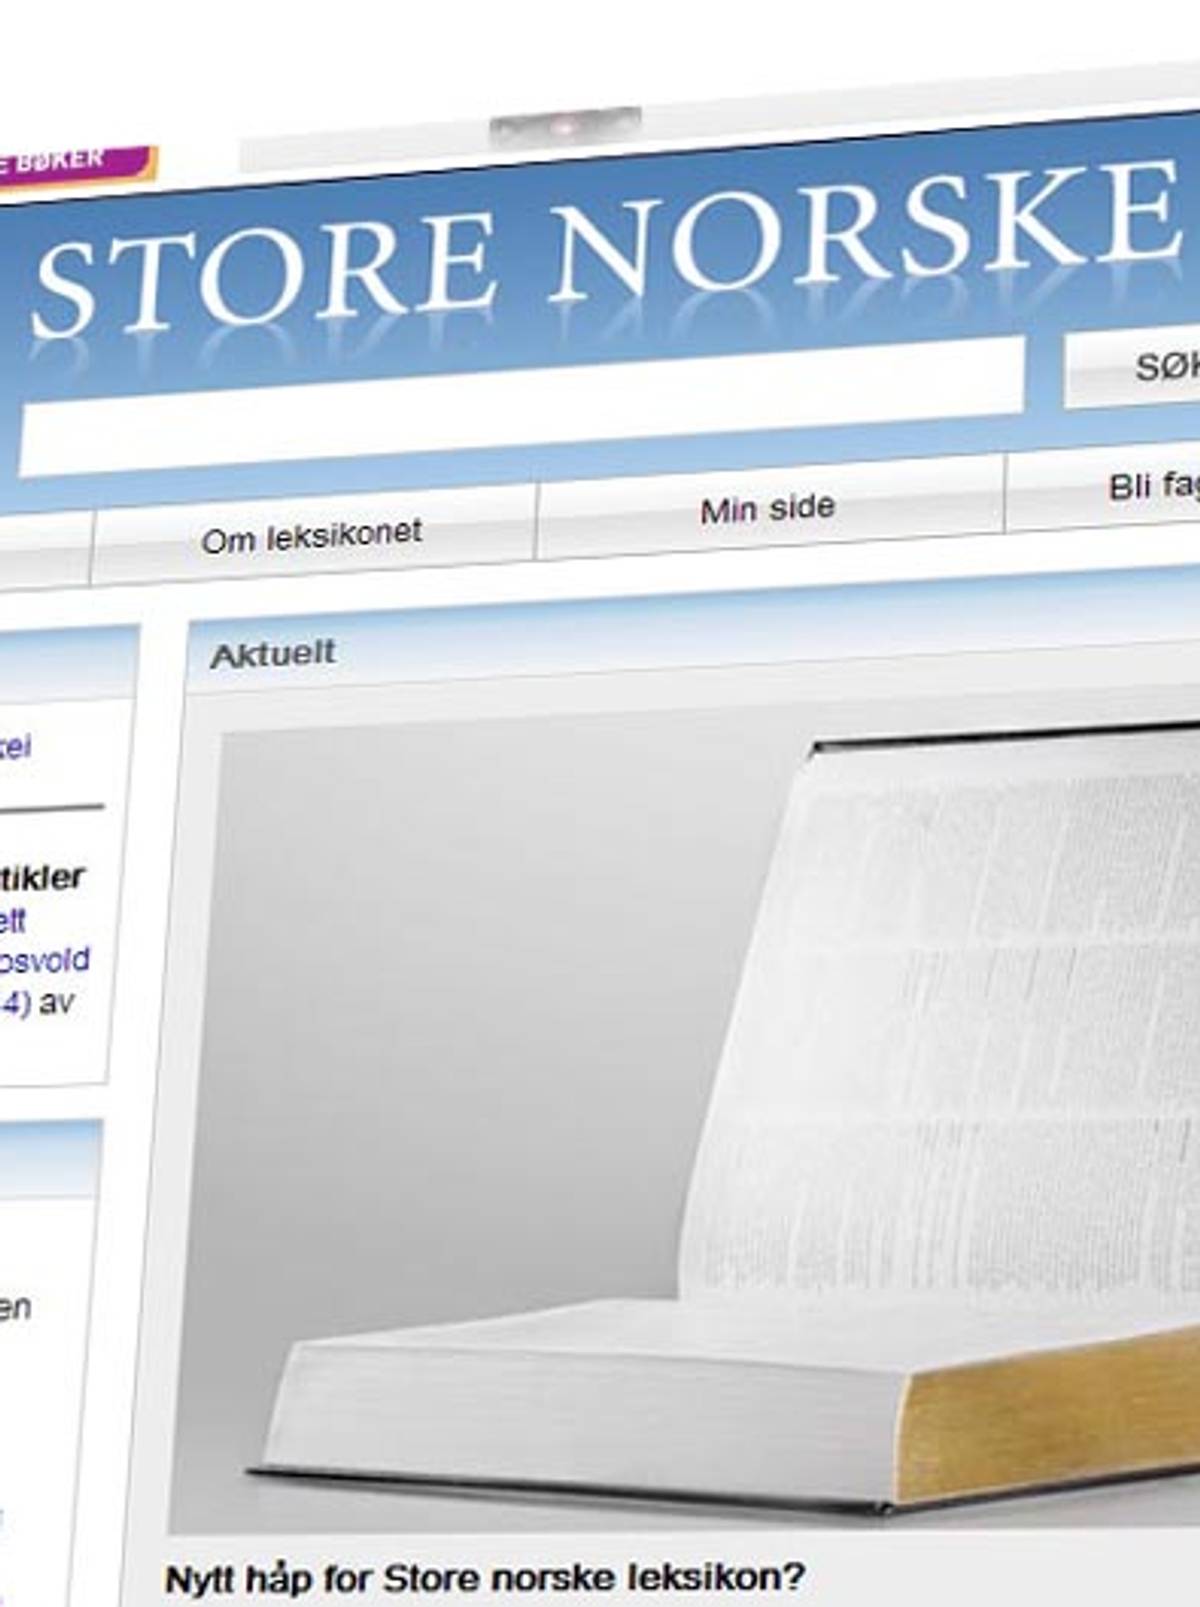 skip – Store norske leksikon